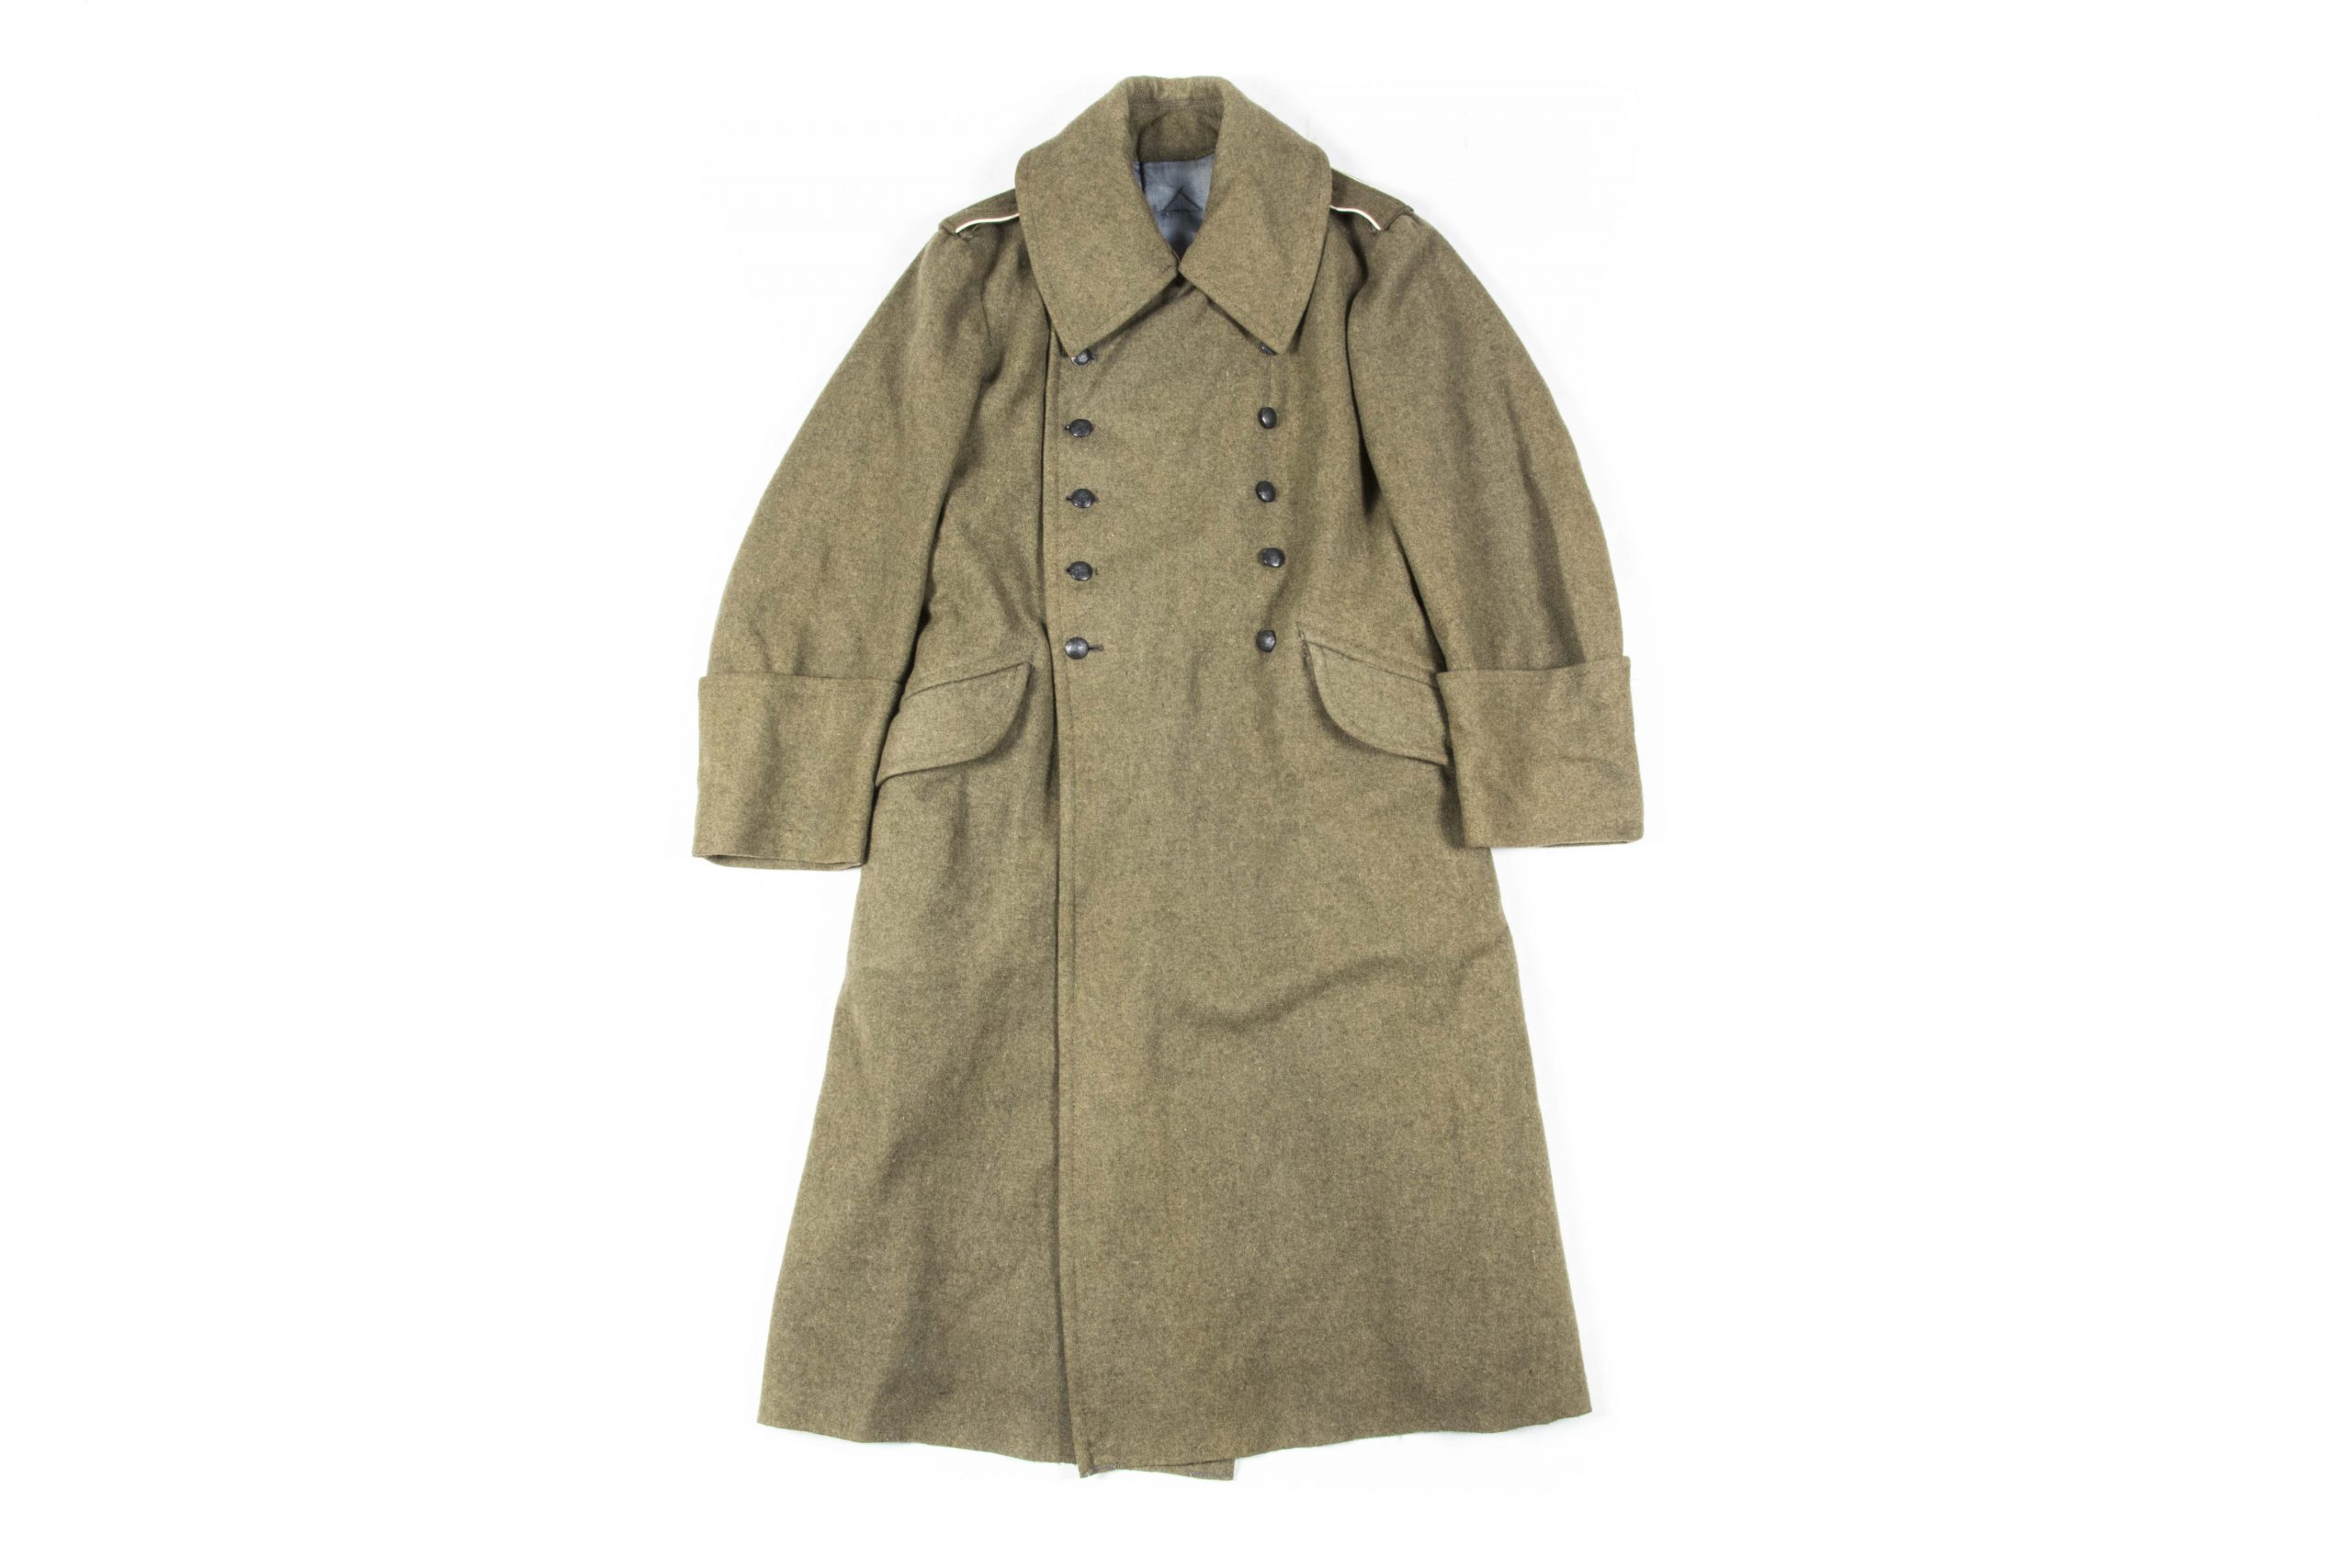 Rare late war M45 pattern overcoat in brown wool – fjm44